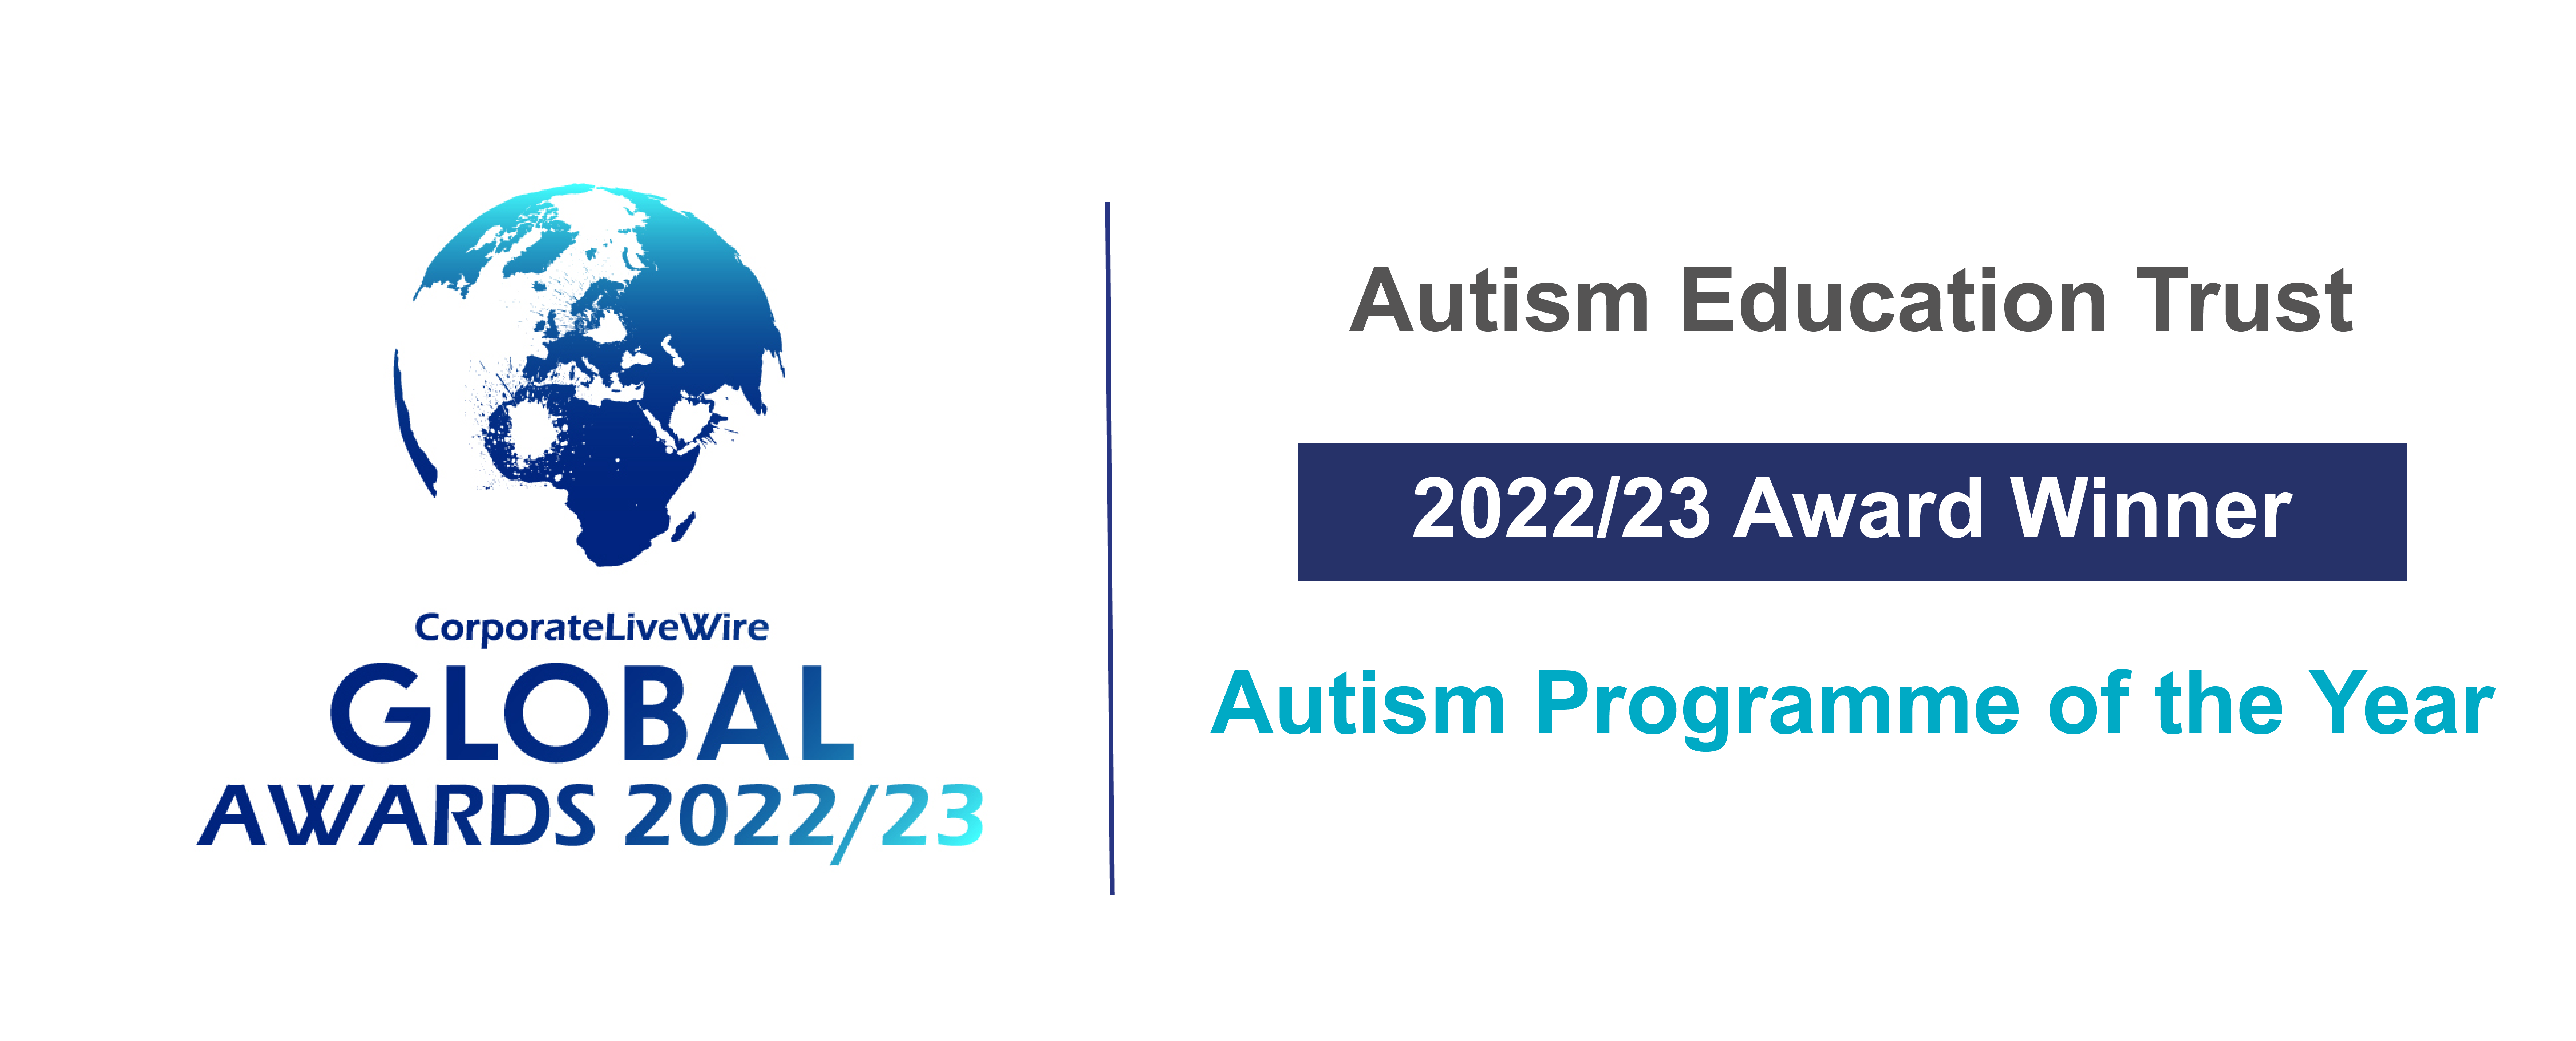 Global Awards 2022-23 Autism Education Trust, Best Autism Education Programme